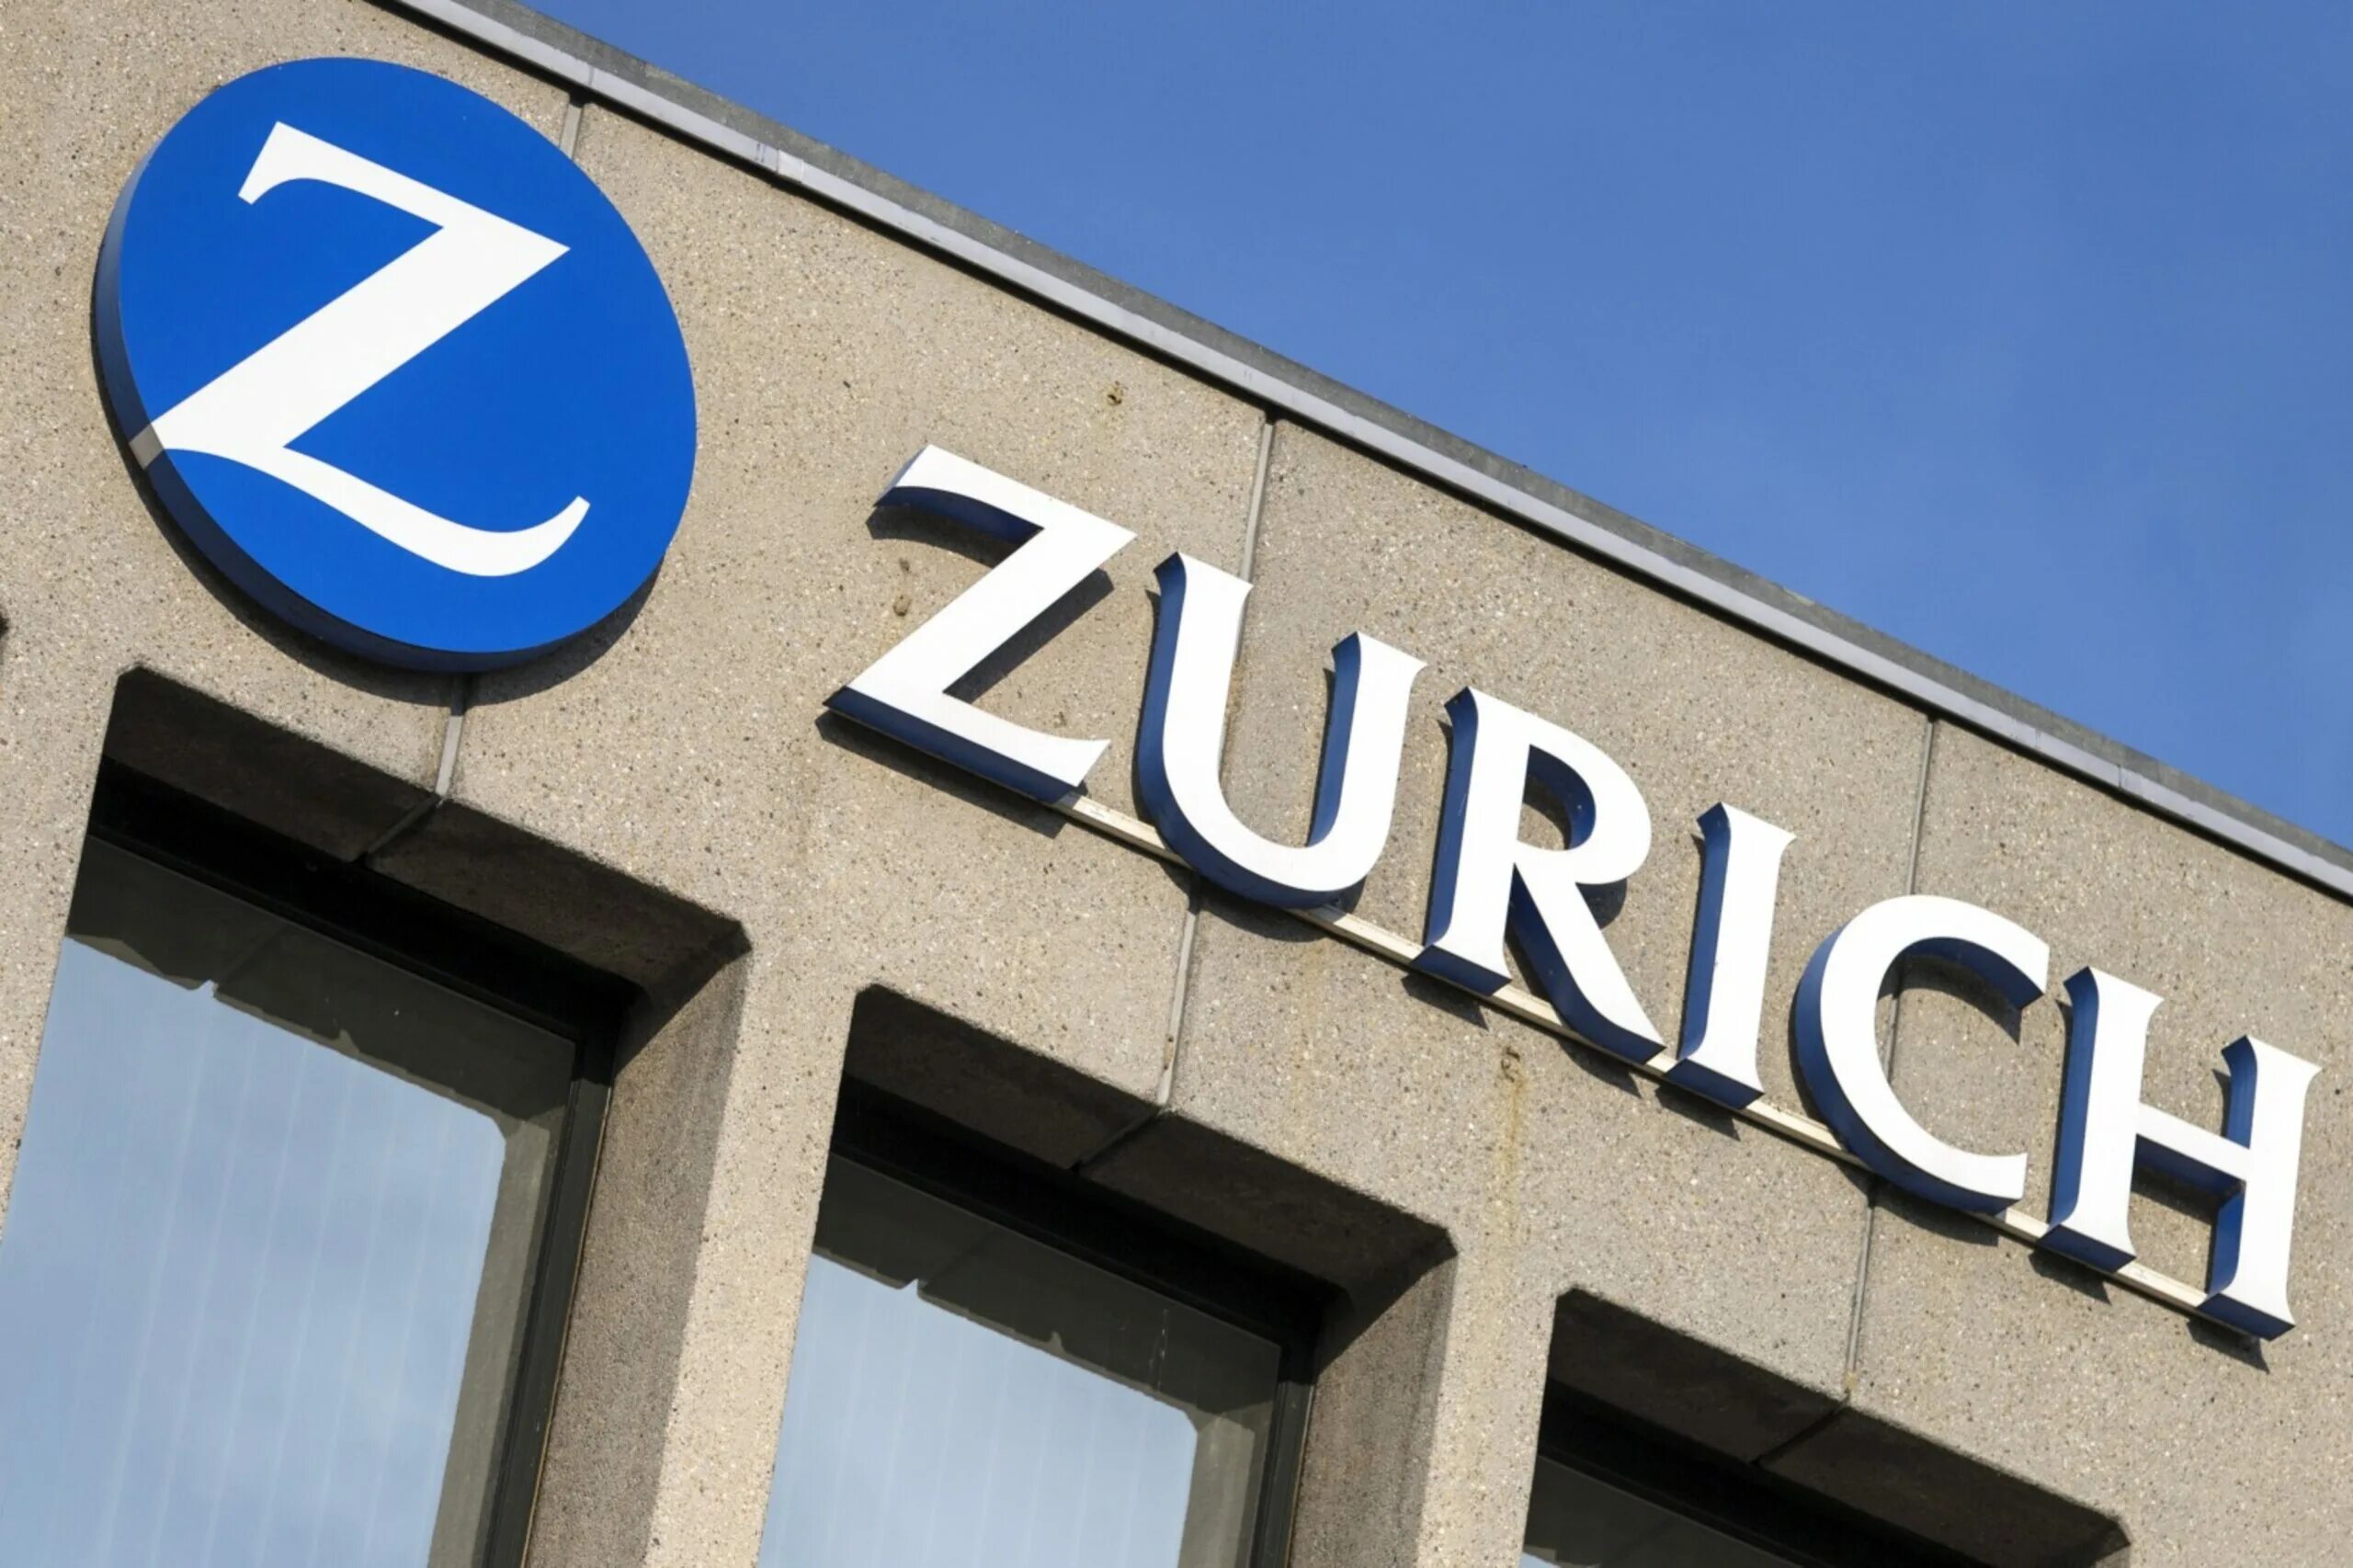 Zurich insurance Group логотип. Банк Цюрих логотип. Цюрих страхование. Цюрих компании.